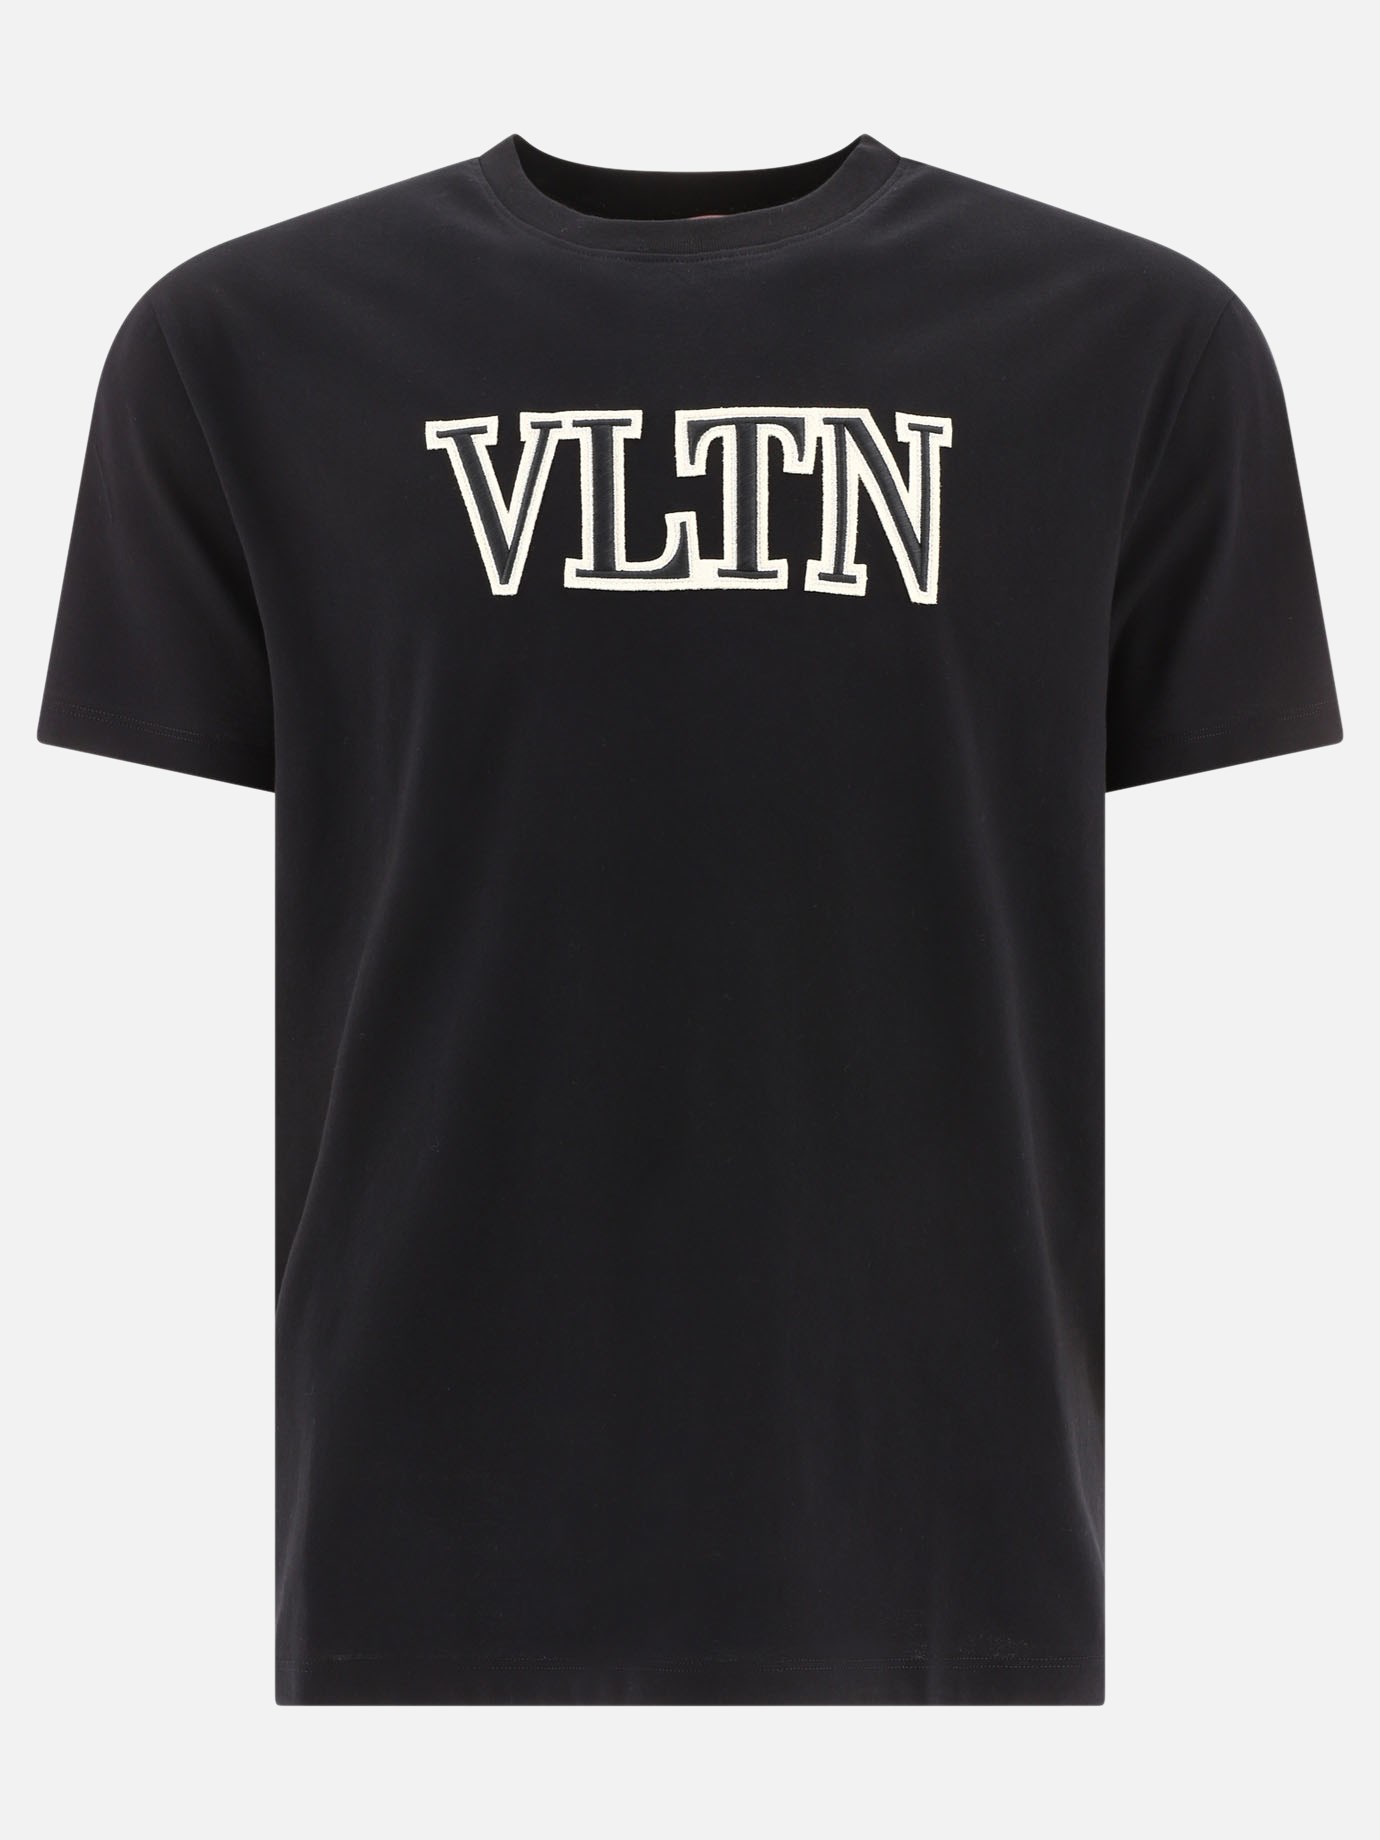  VLTN  t-shirtby Valentino - 4